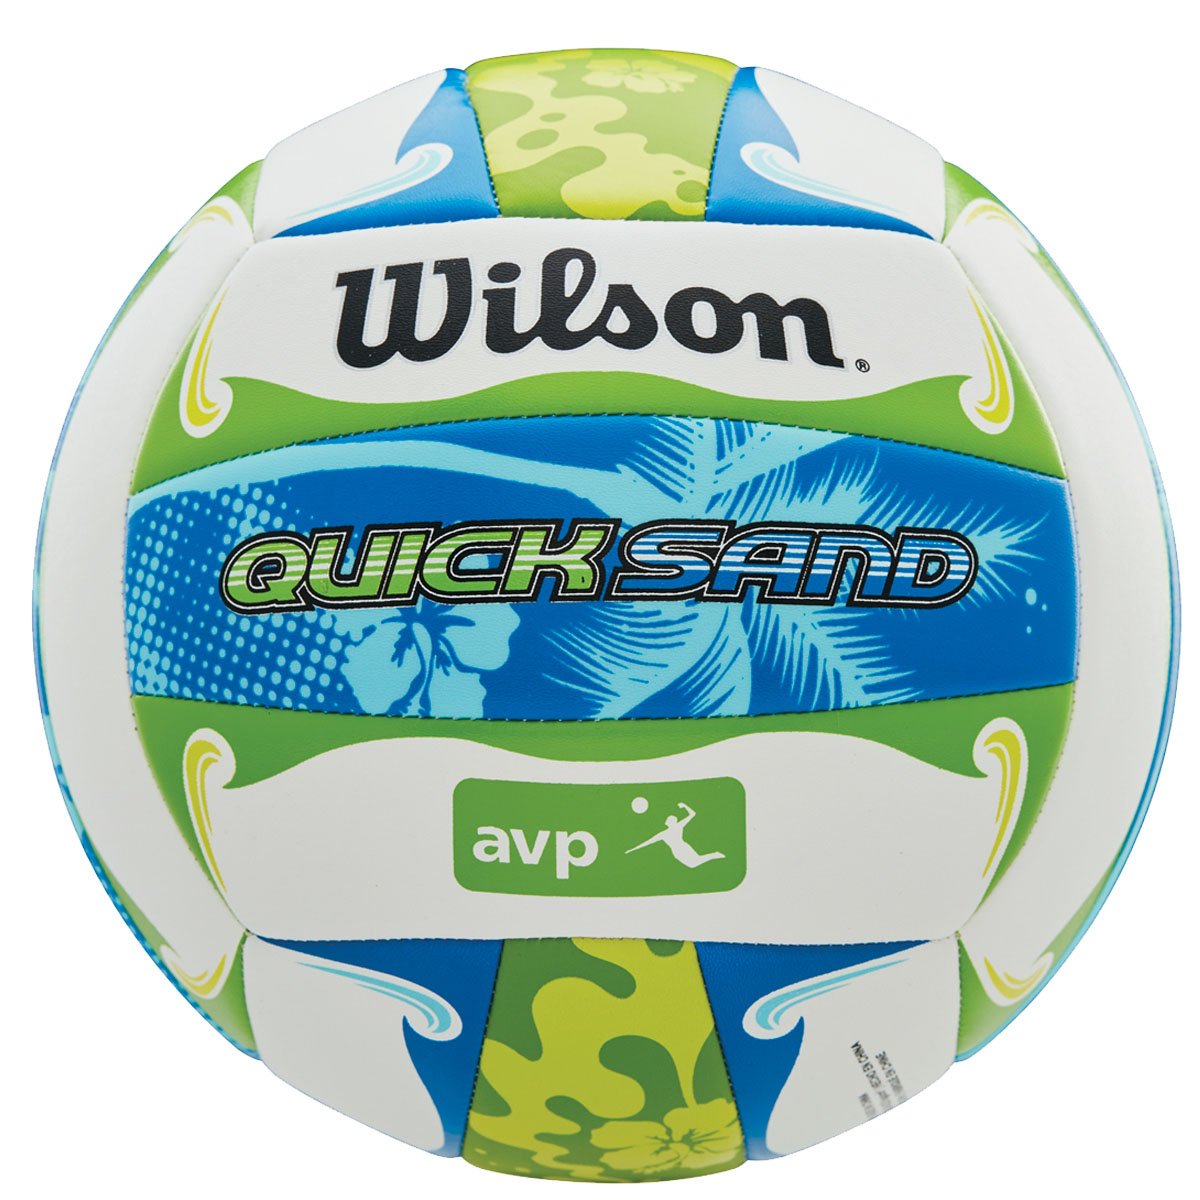 Balon de Volleyball Quicksand Aloha Wilson